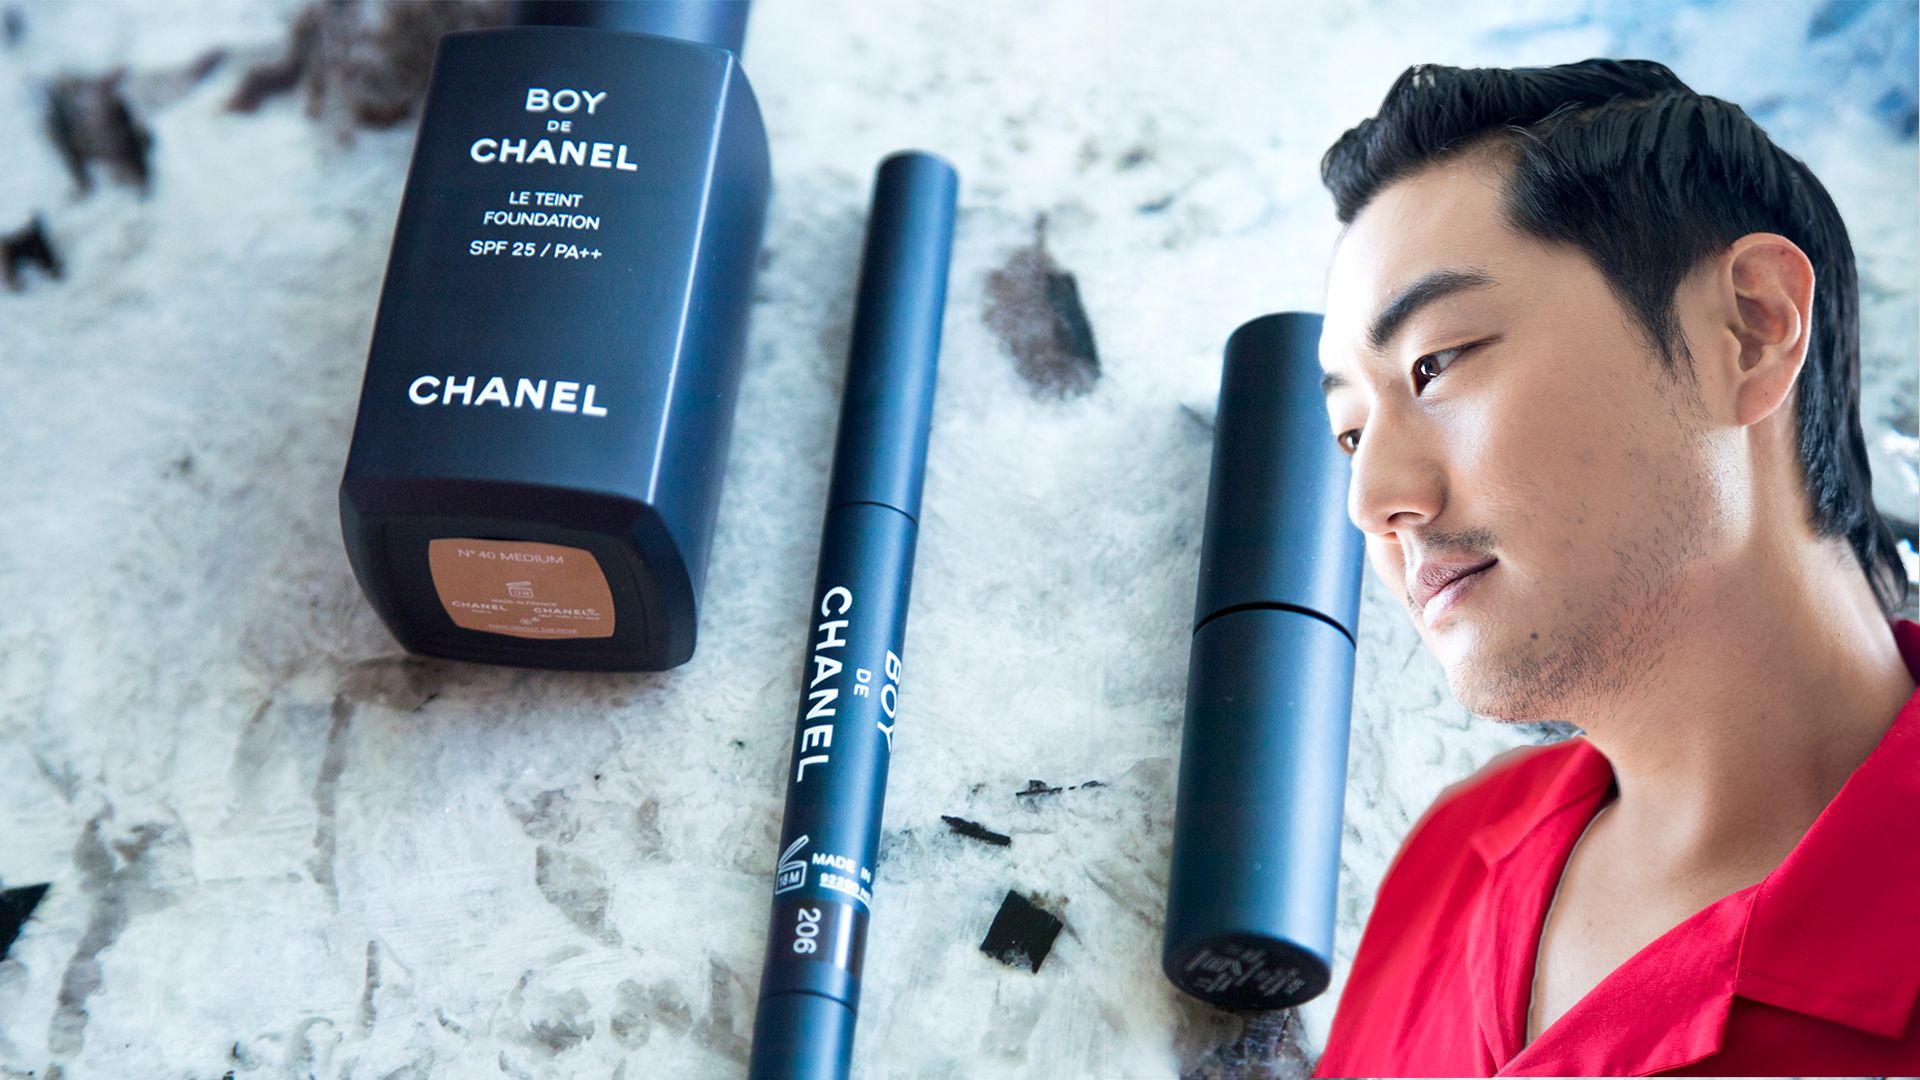 Reviewing Chanel's first men's makeup line Boy de Chanel